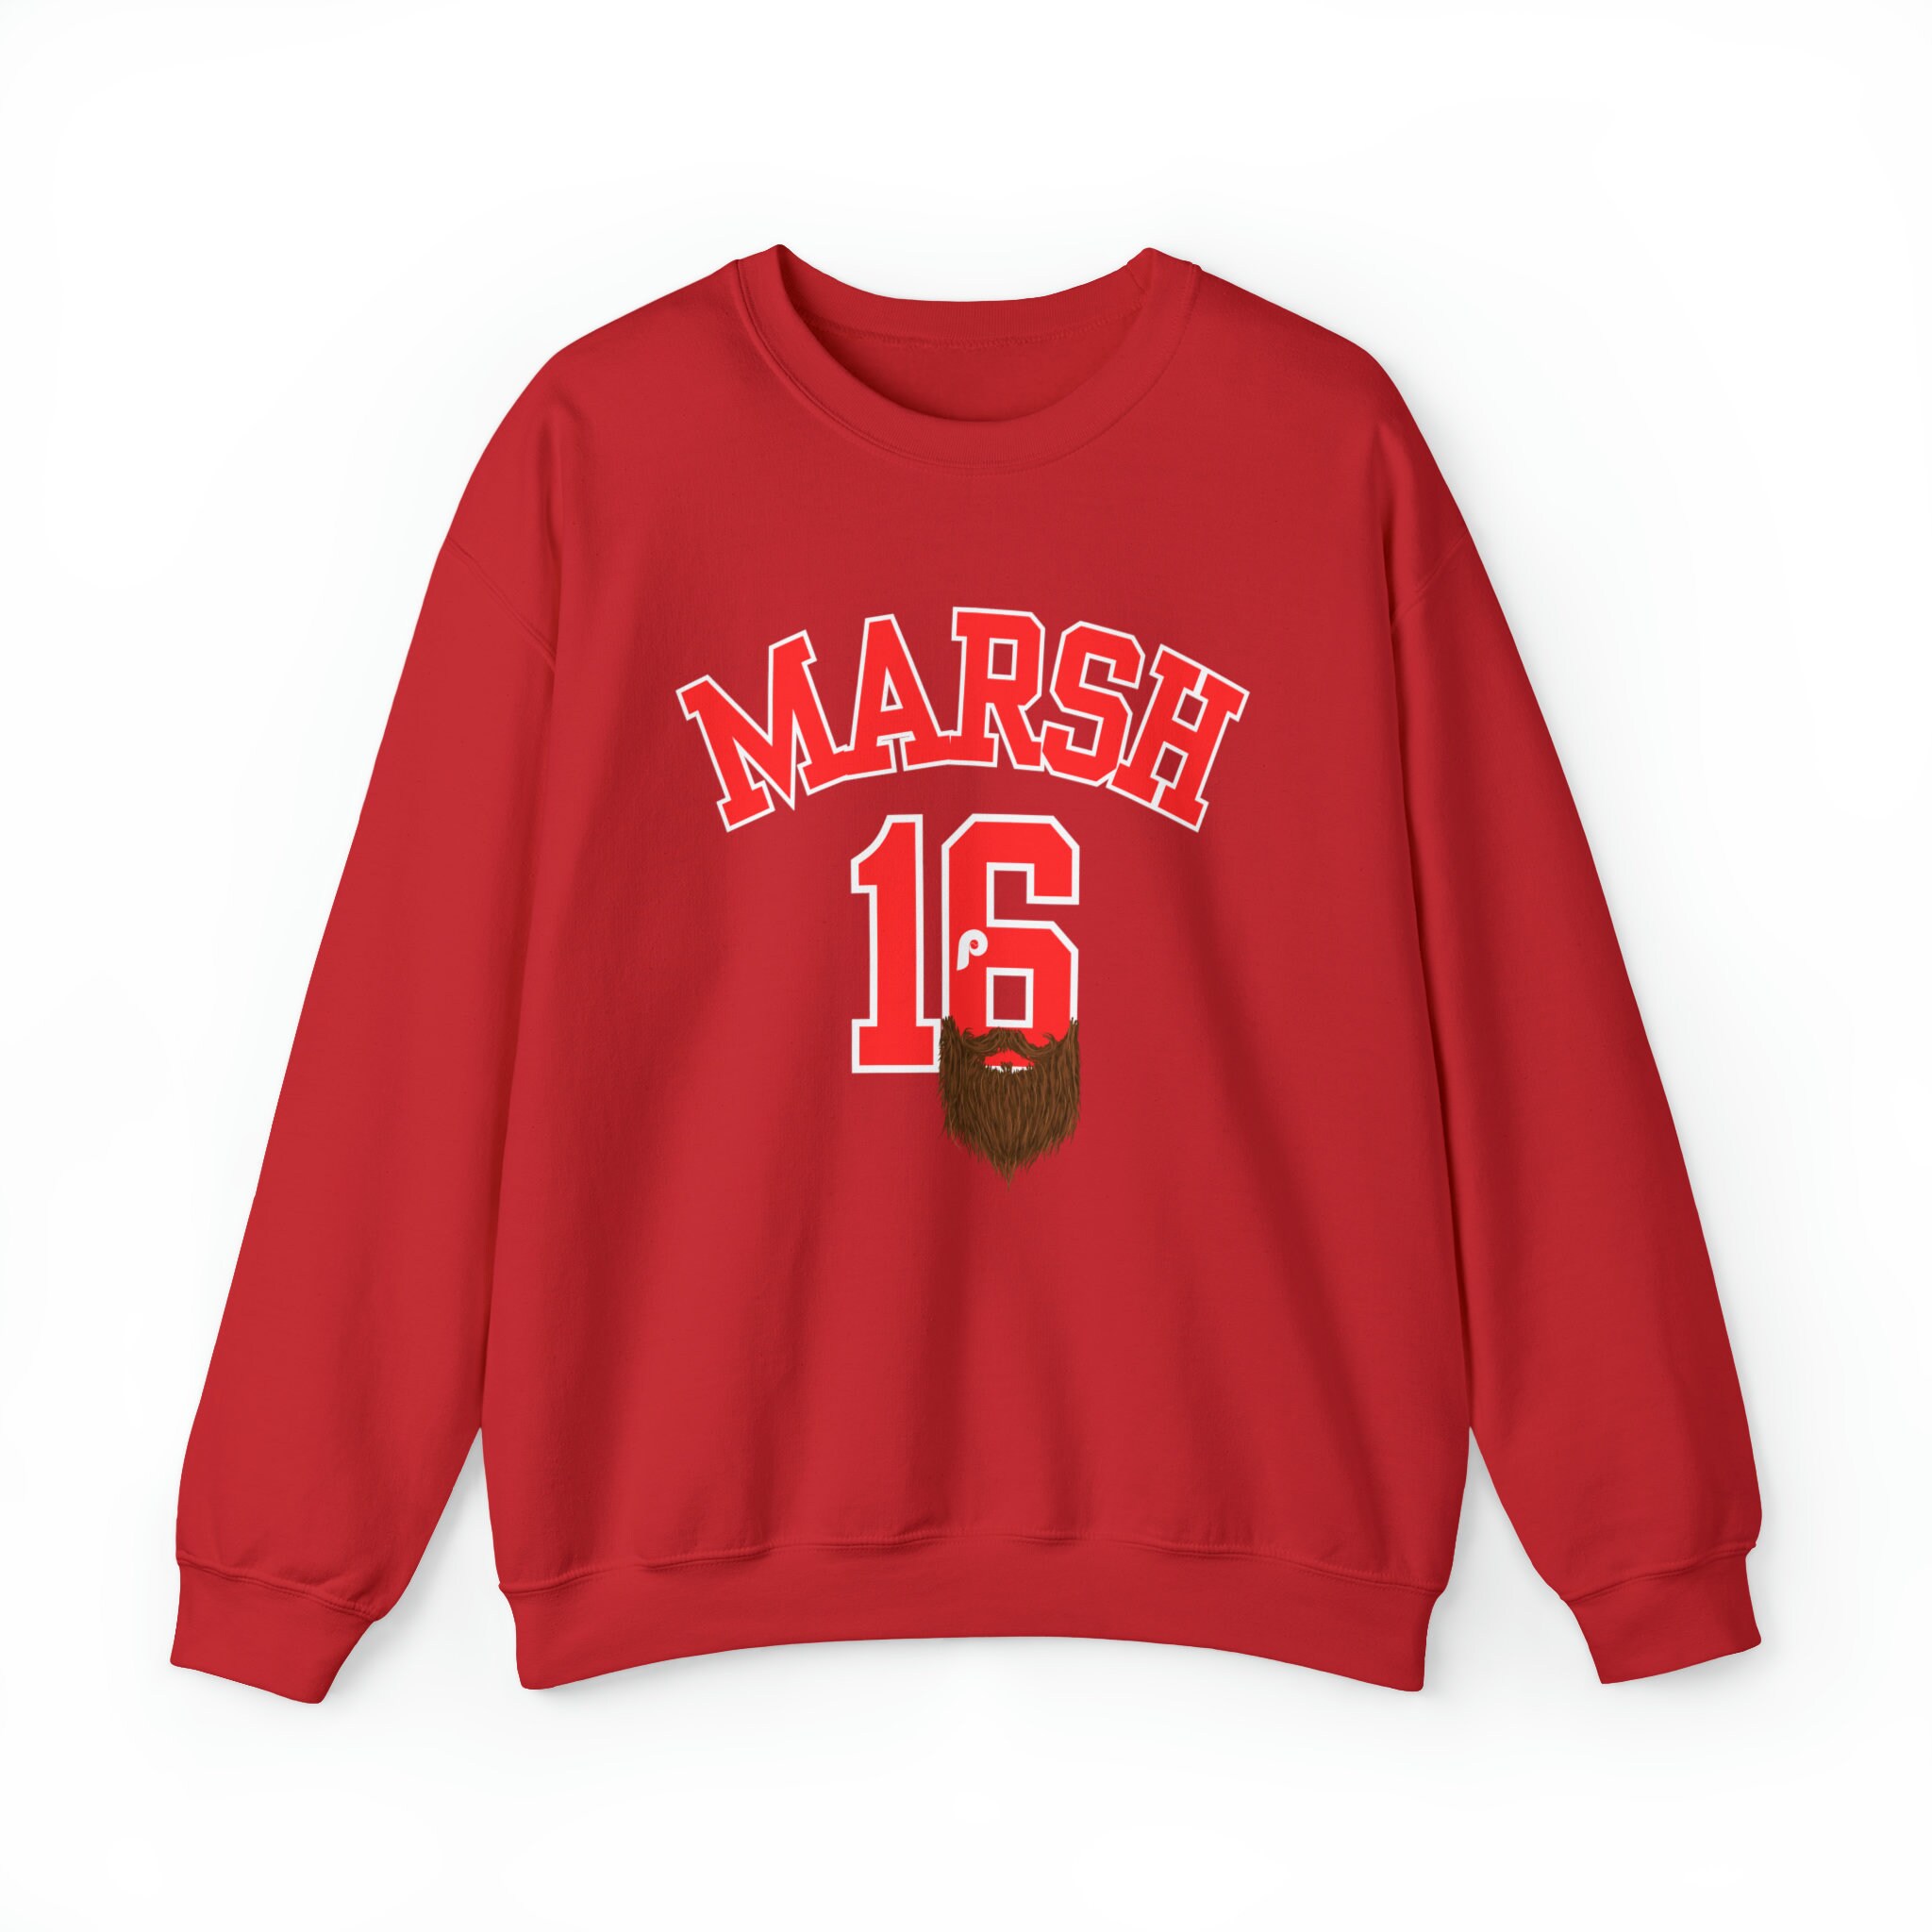 Brandon Marsh: Marshy Shirt, Philadelphia - MLBPA Licensed - BreakingT